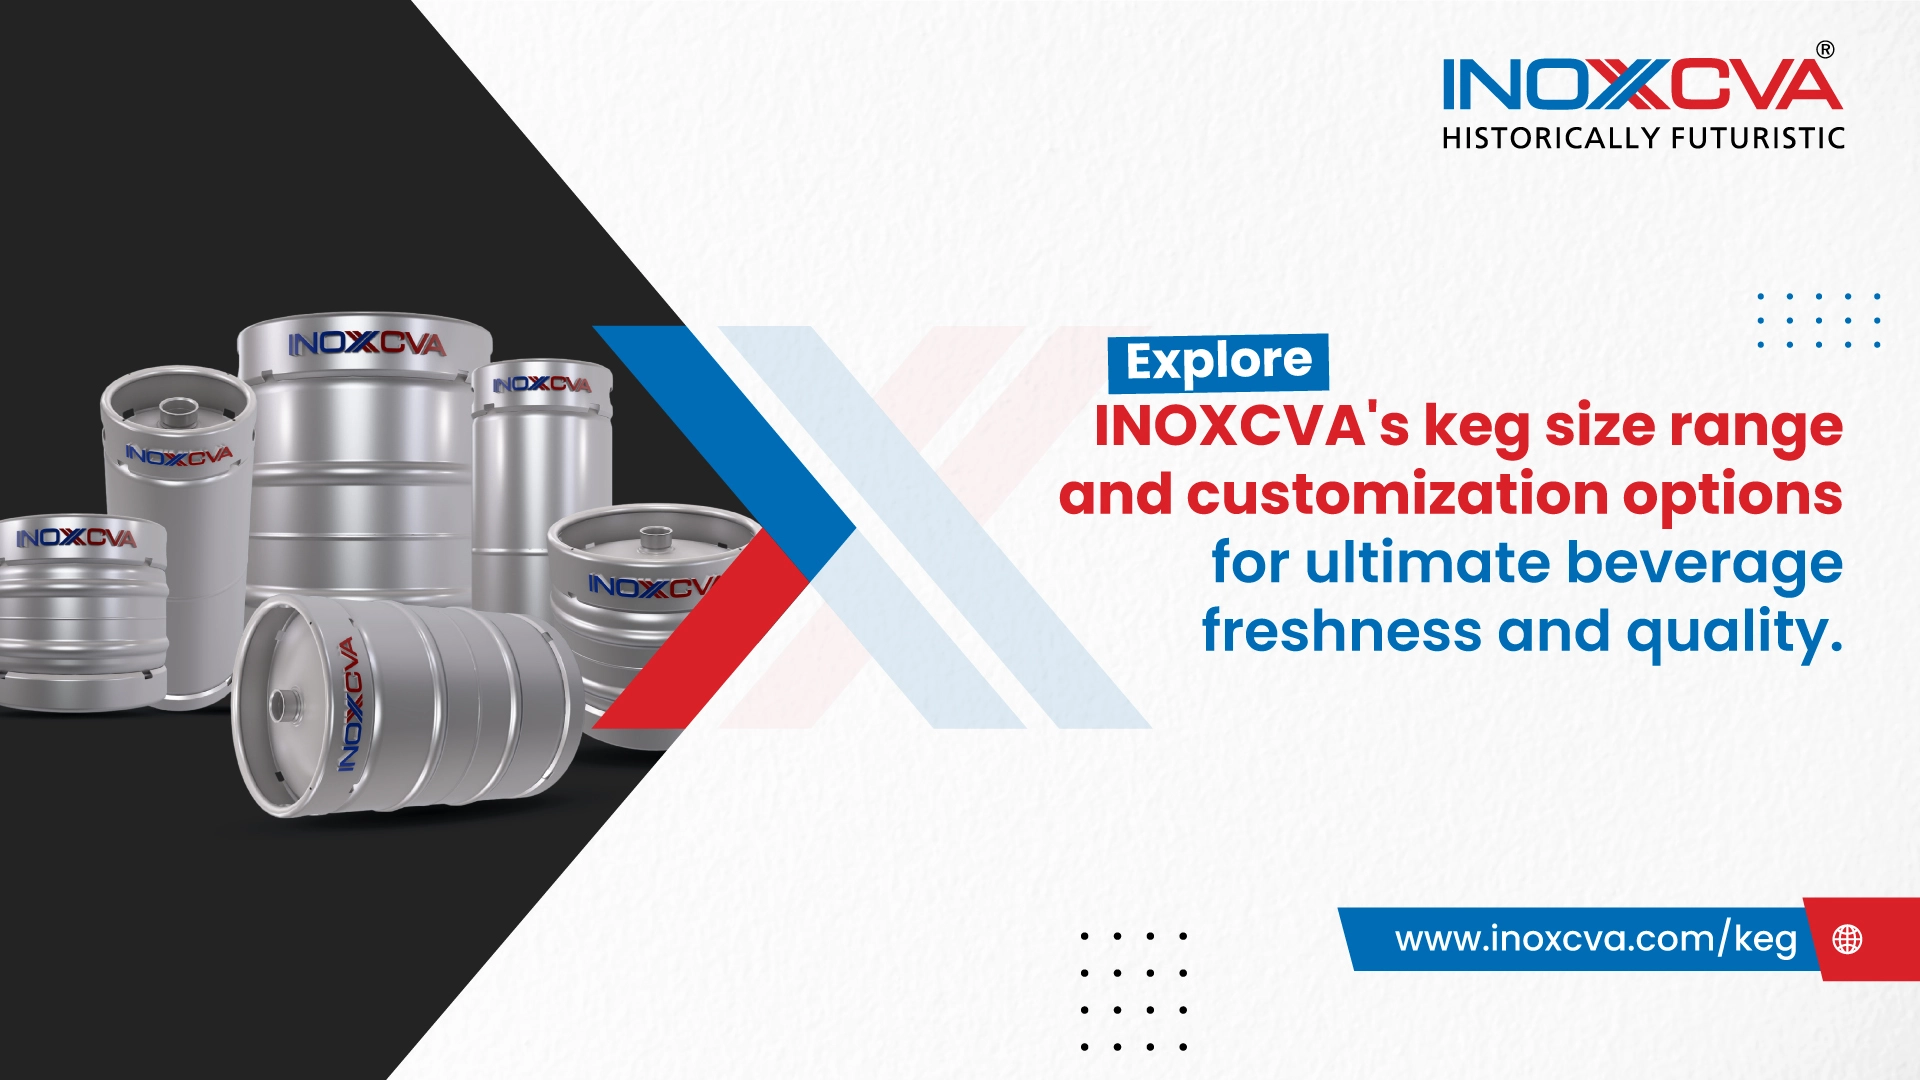 Explore INOXCVA's keg size range and customization options for ultimate beverage freshness and quality.